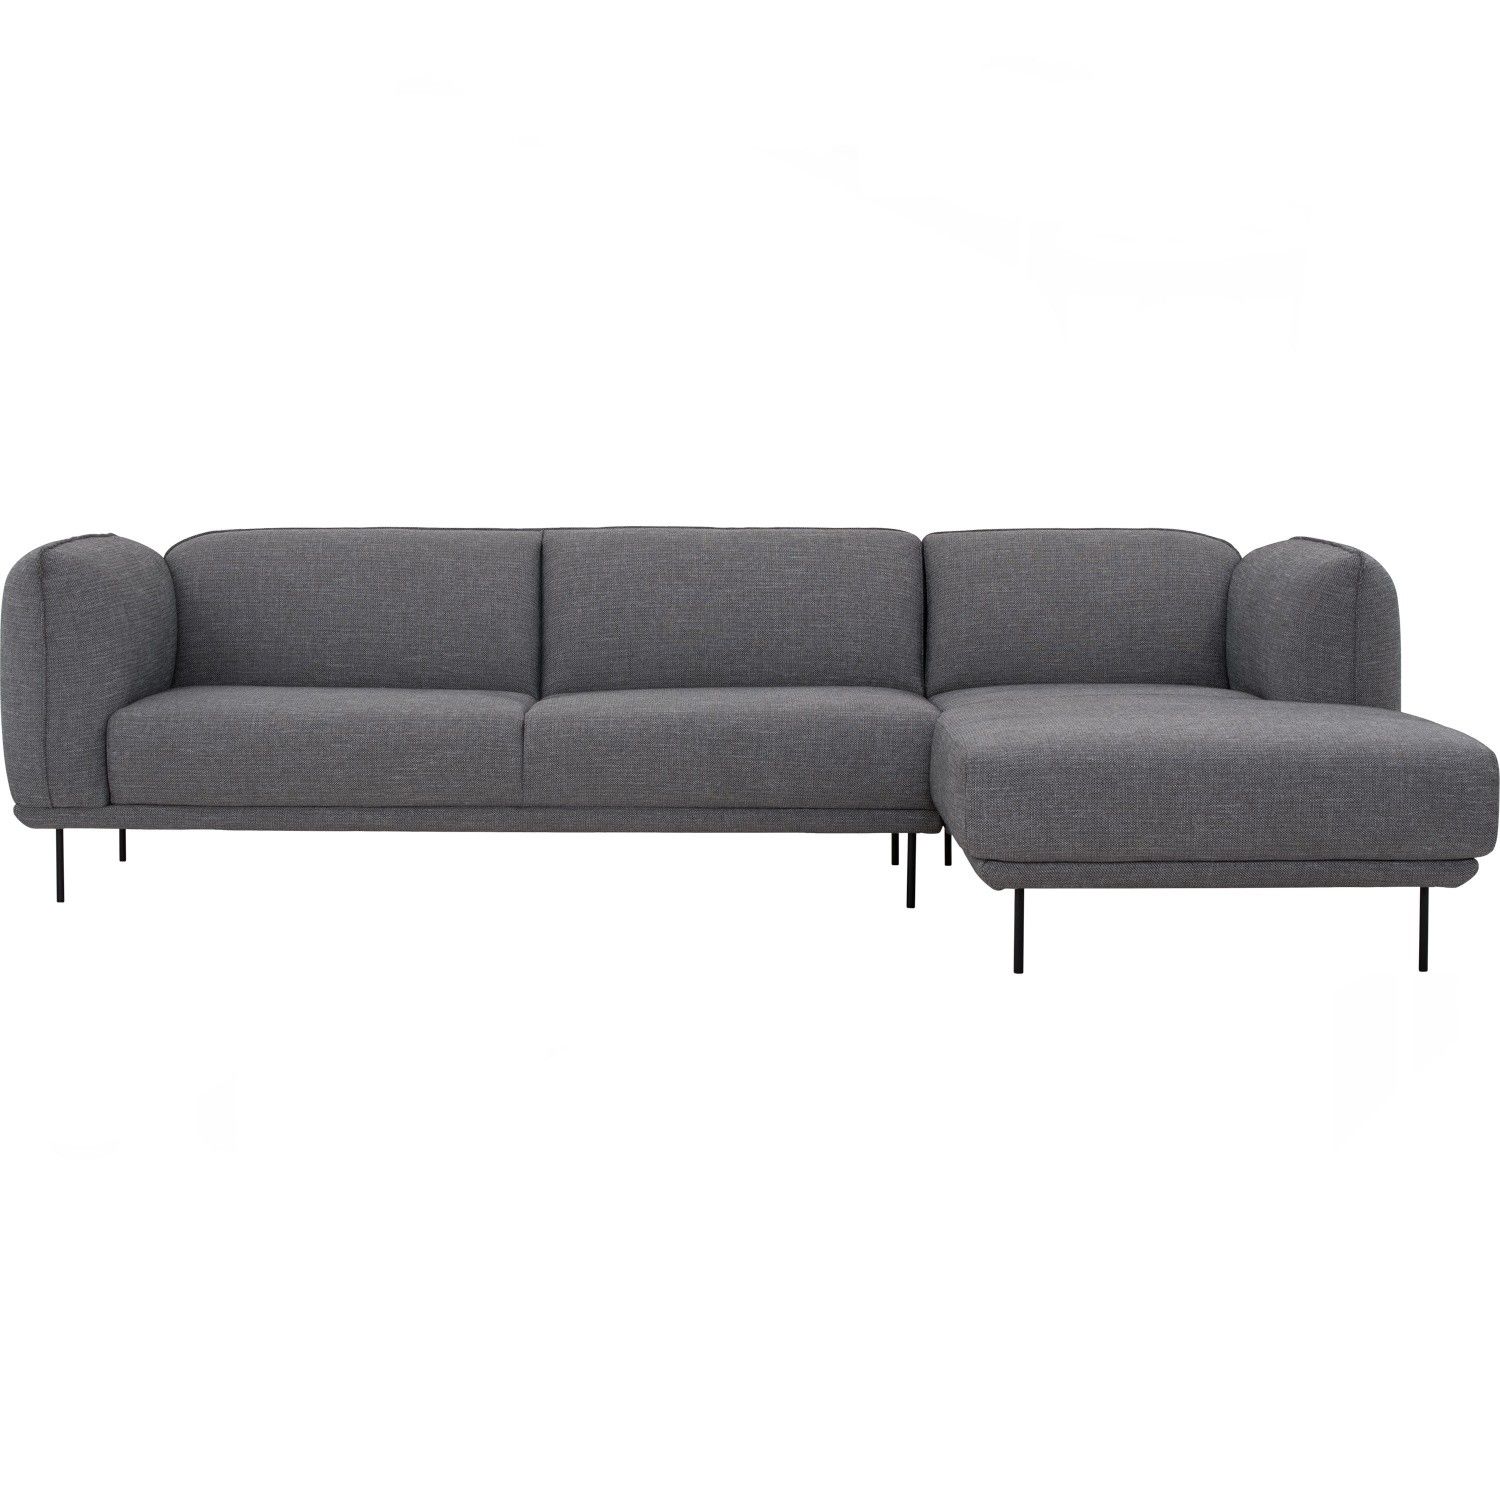 Miro 3 Seater L Shaped Sofa Grey – Furnituredirect (View 15 of 15)